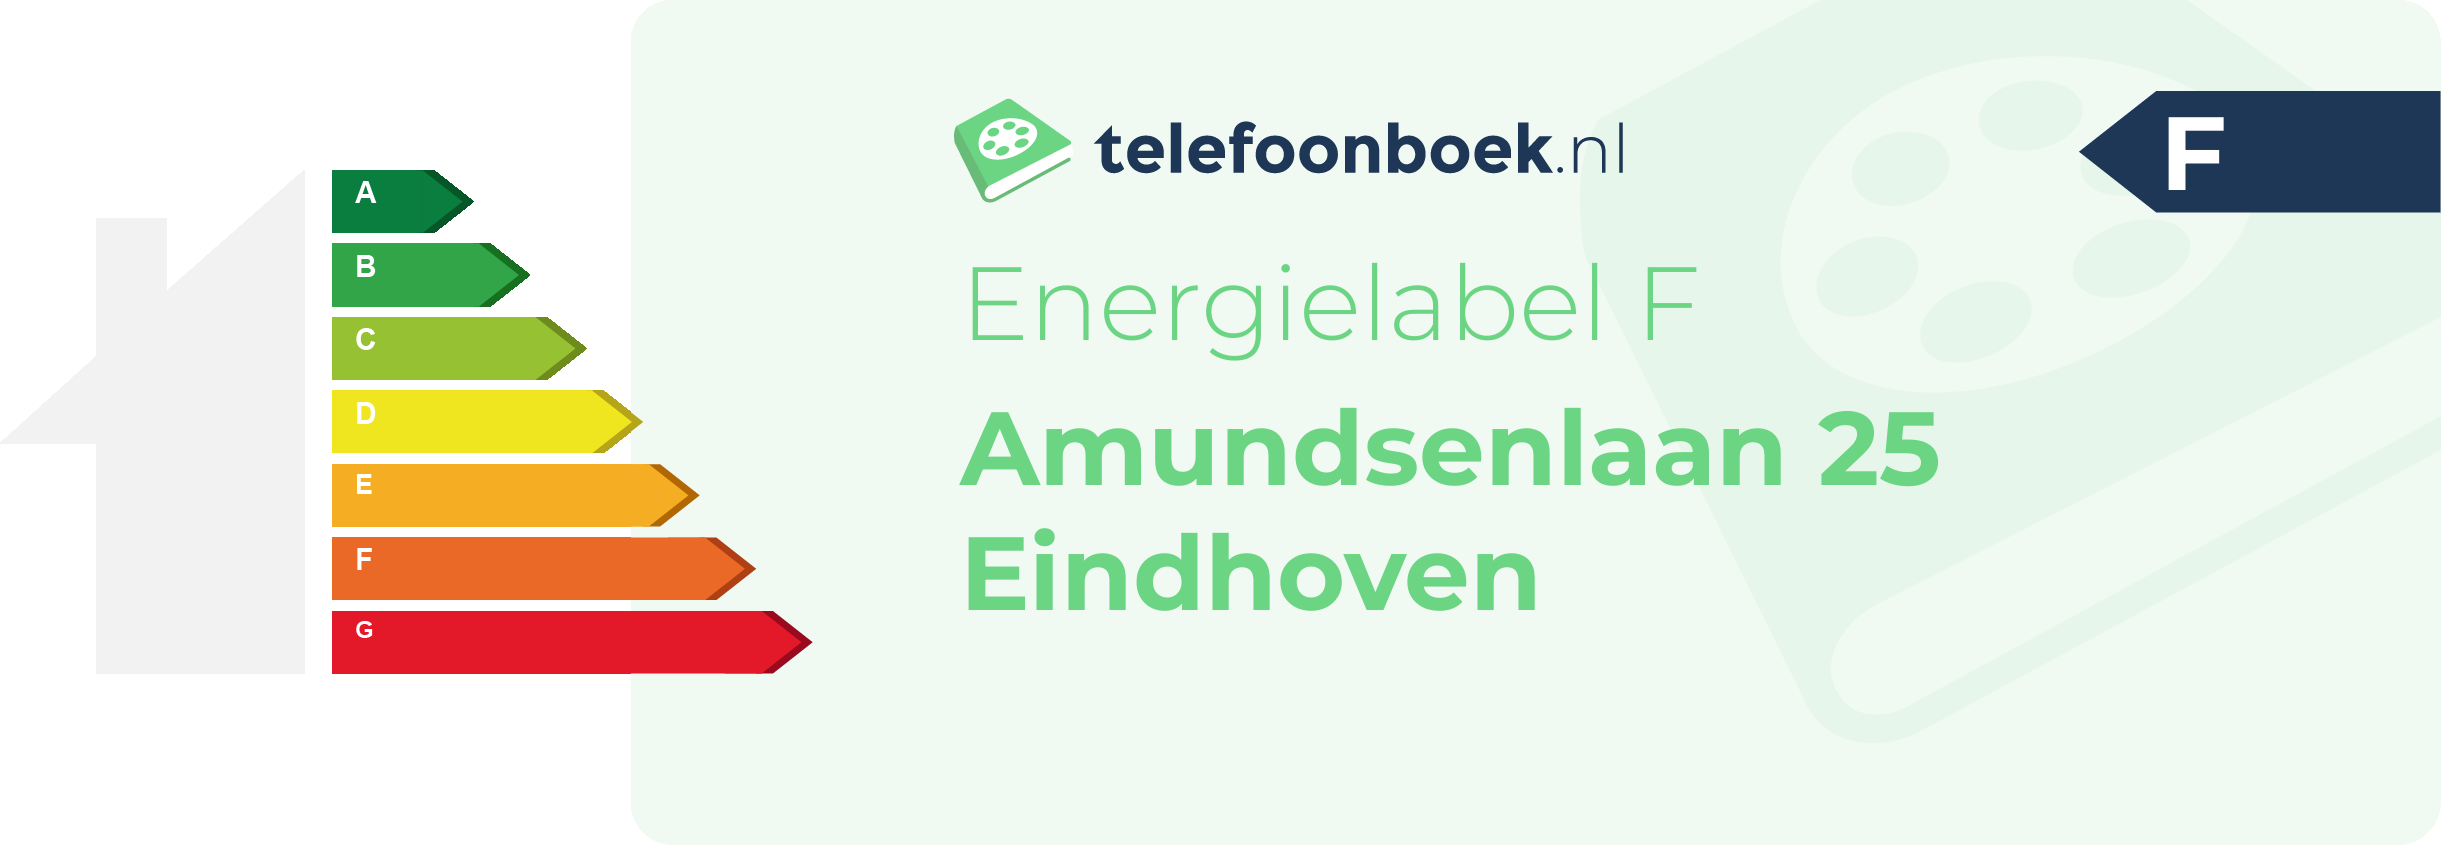 Energielabel Amundsenlaan 25 Eindhoven